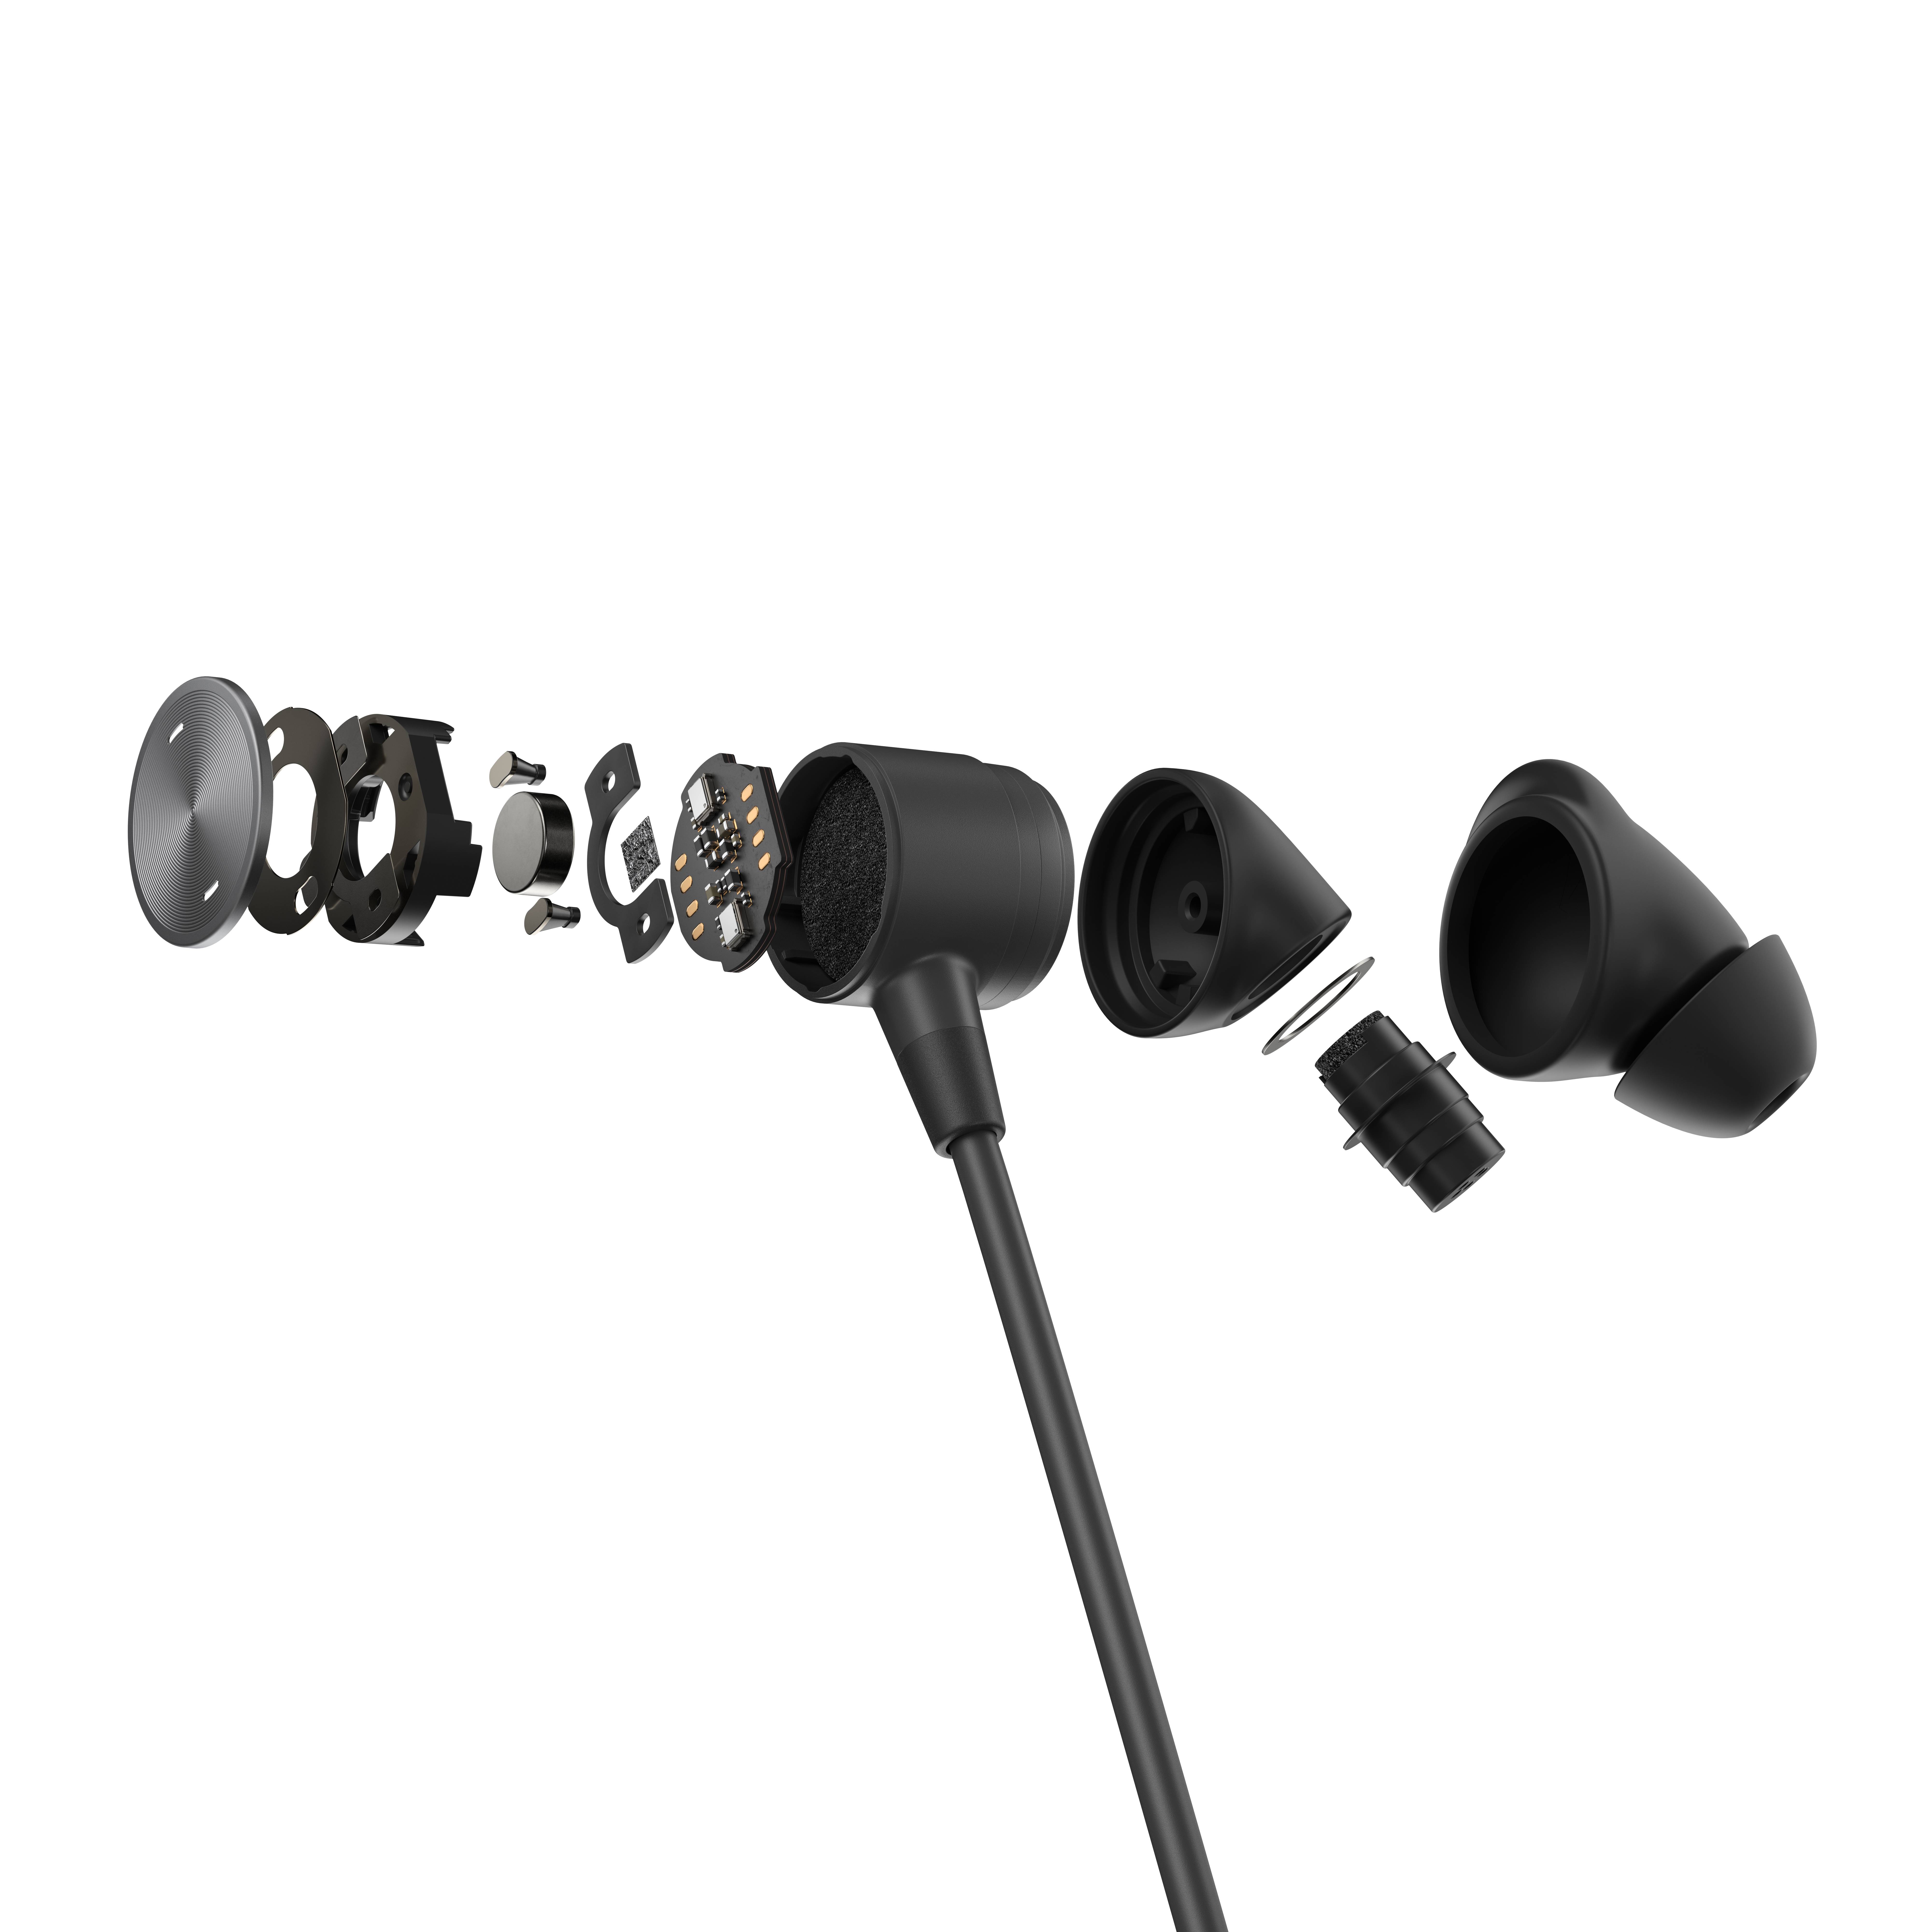 Rca Informatique - image du produit : LOGI ZONE WIRED EARBUDS TEAMS - GRAPHITE - EMEA